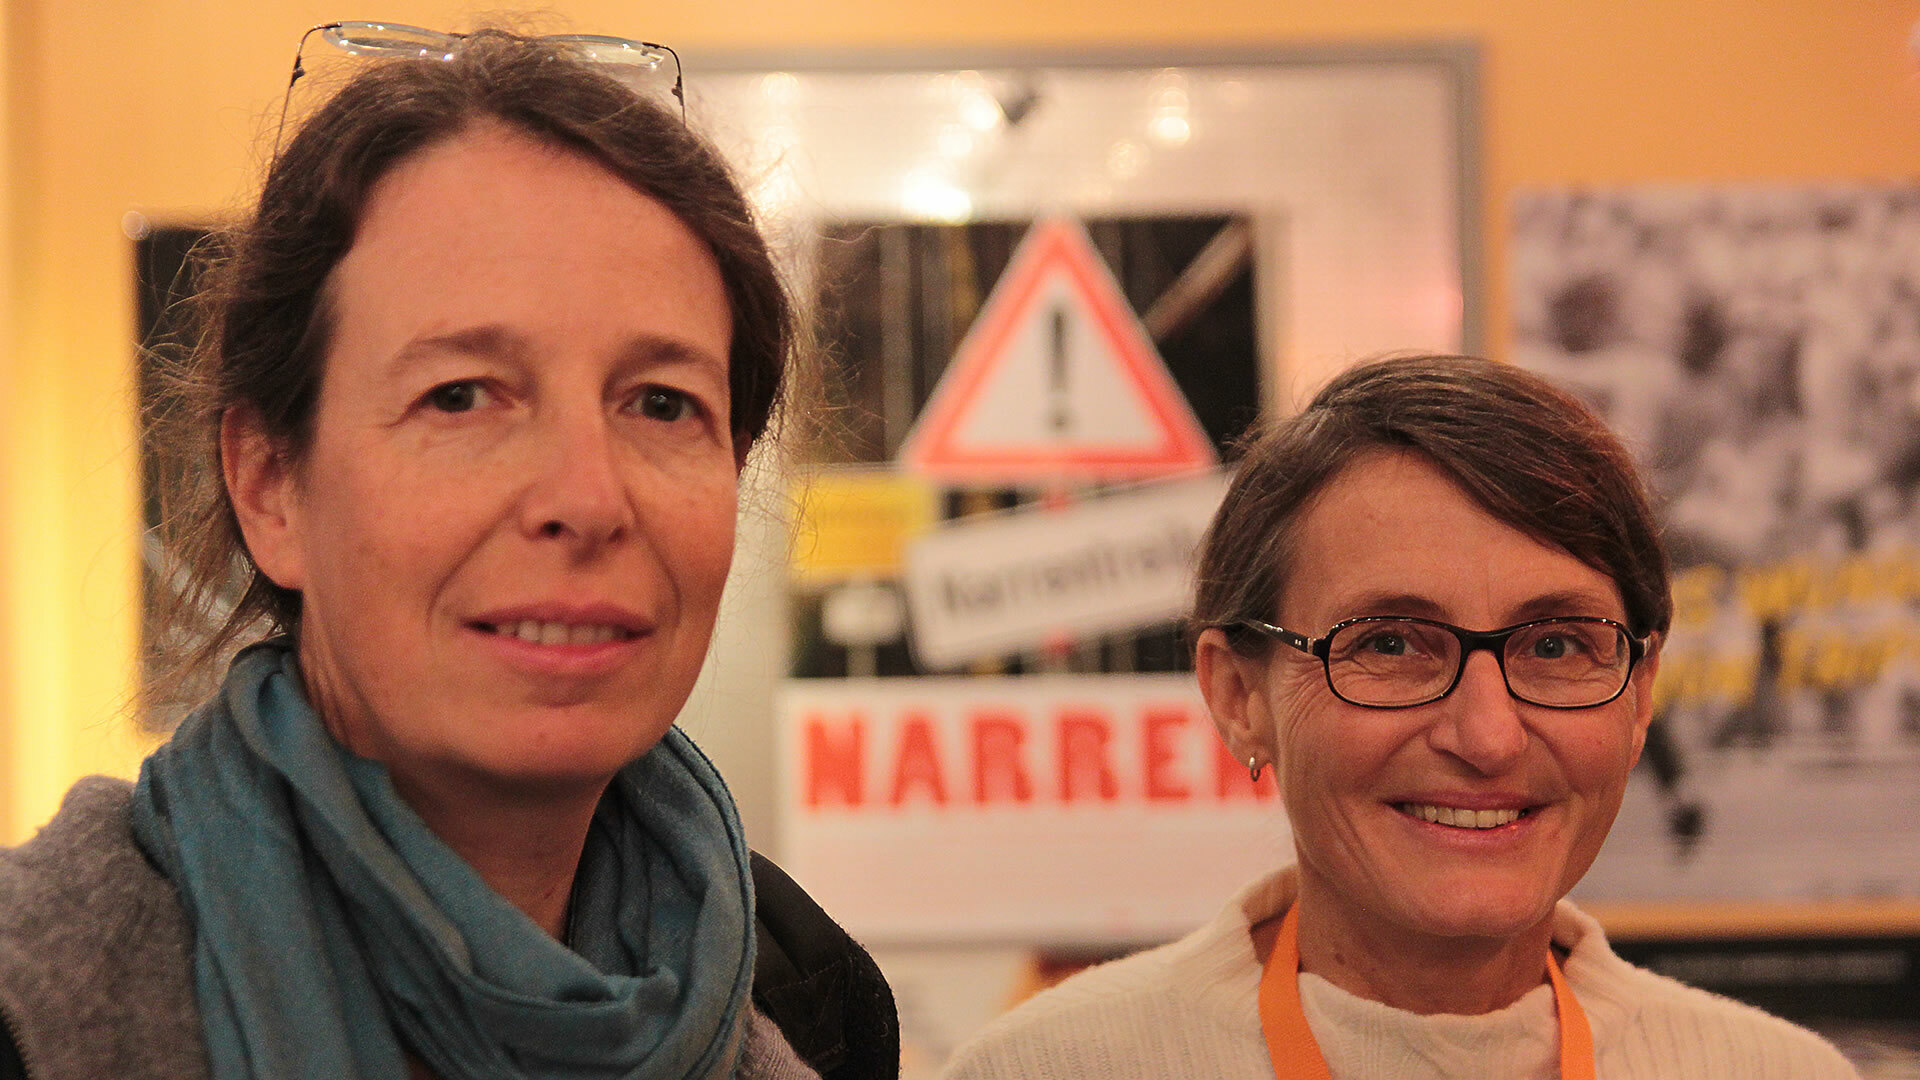 HoF 2019: Wiltrud Baier and Sigrun Köhler are presenting NARREN.